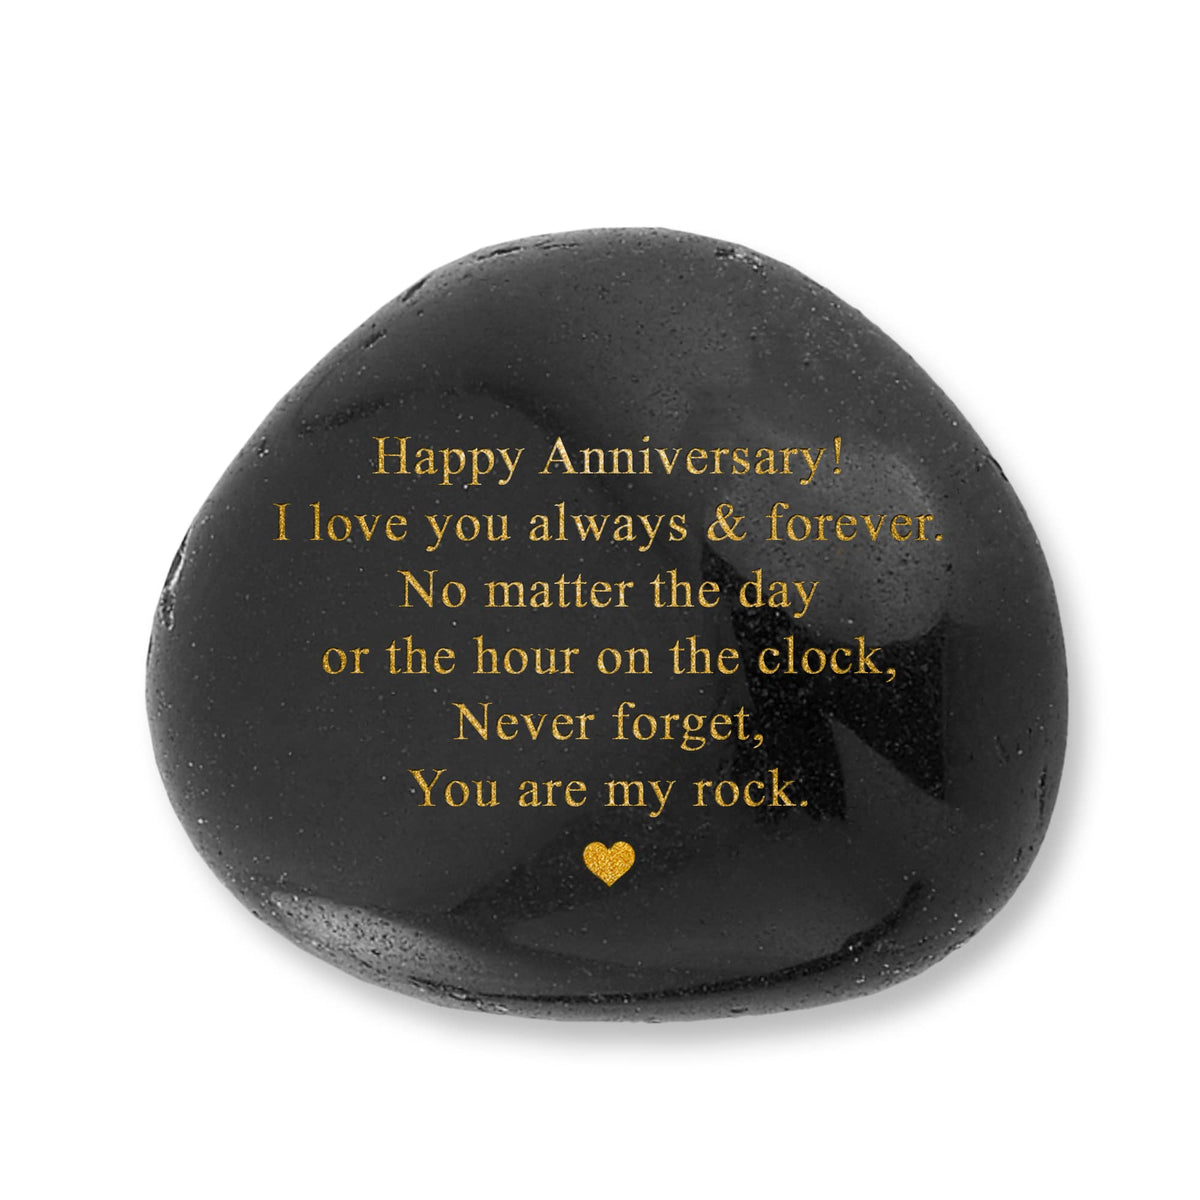 Happy Anniversary Rock - Heartwarming You are My Rock Wedding Anniversary Presents, Inspiring Anniversary Keepsake for Her, Anniversary Presents for Him, Anniversary Presents for Couple